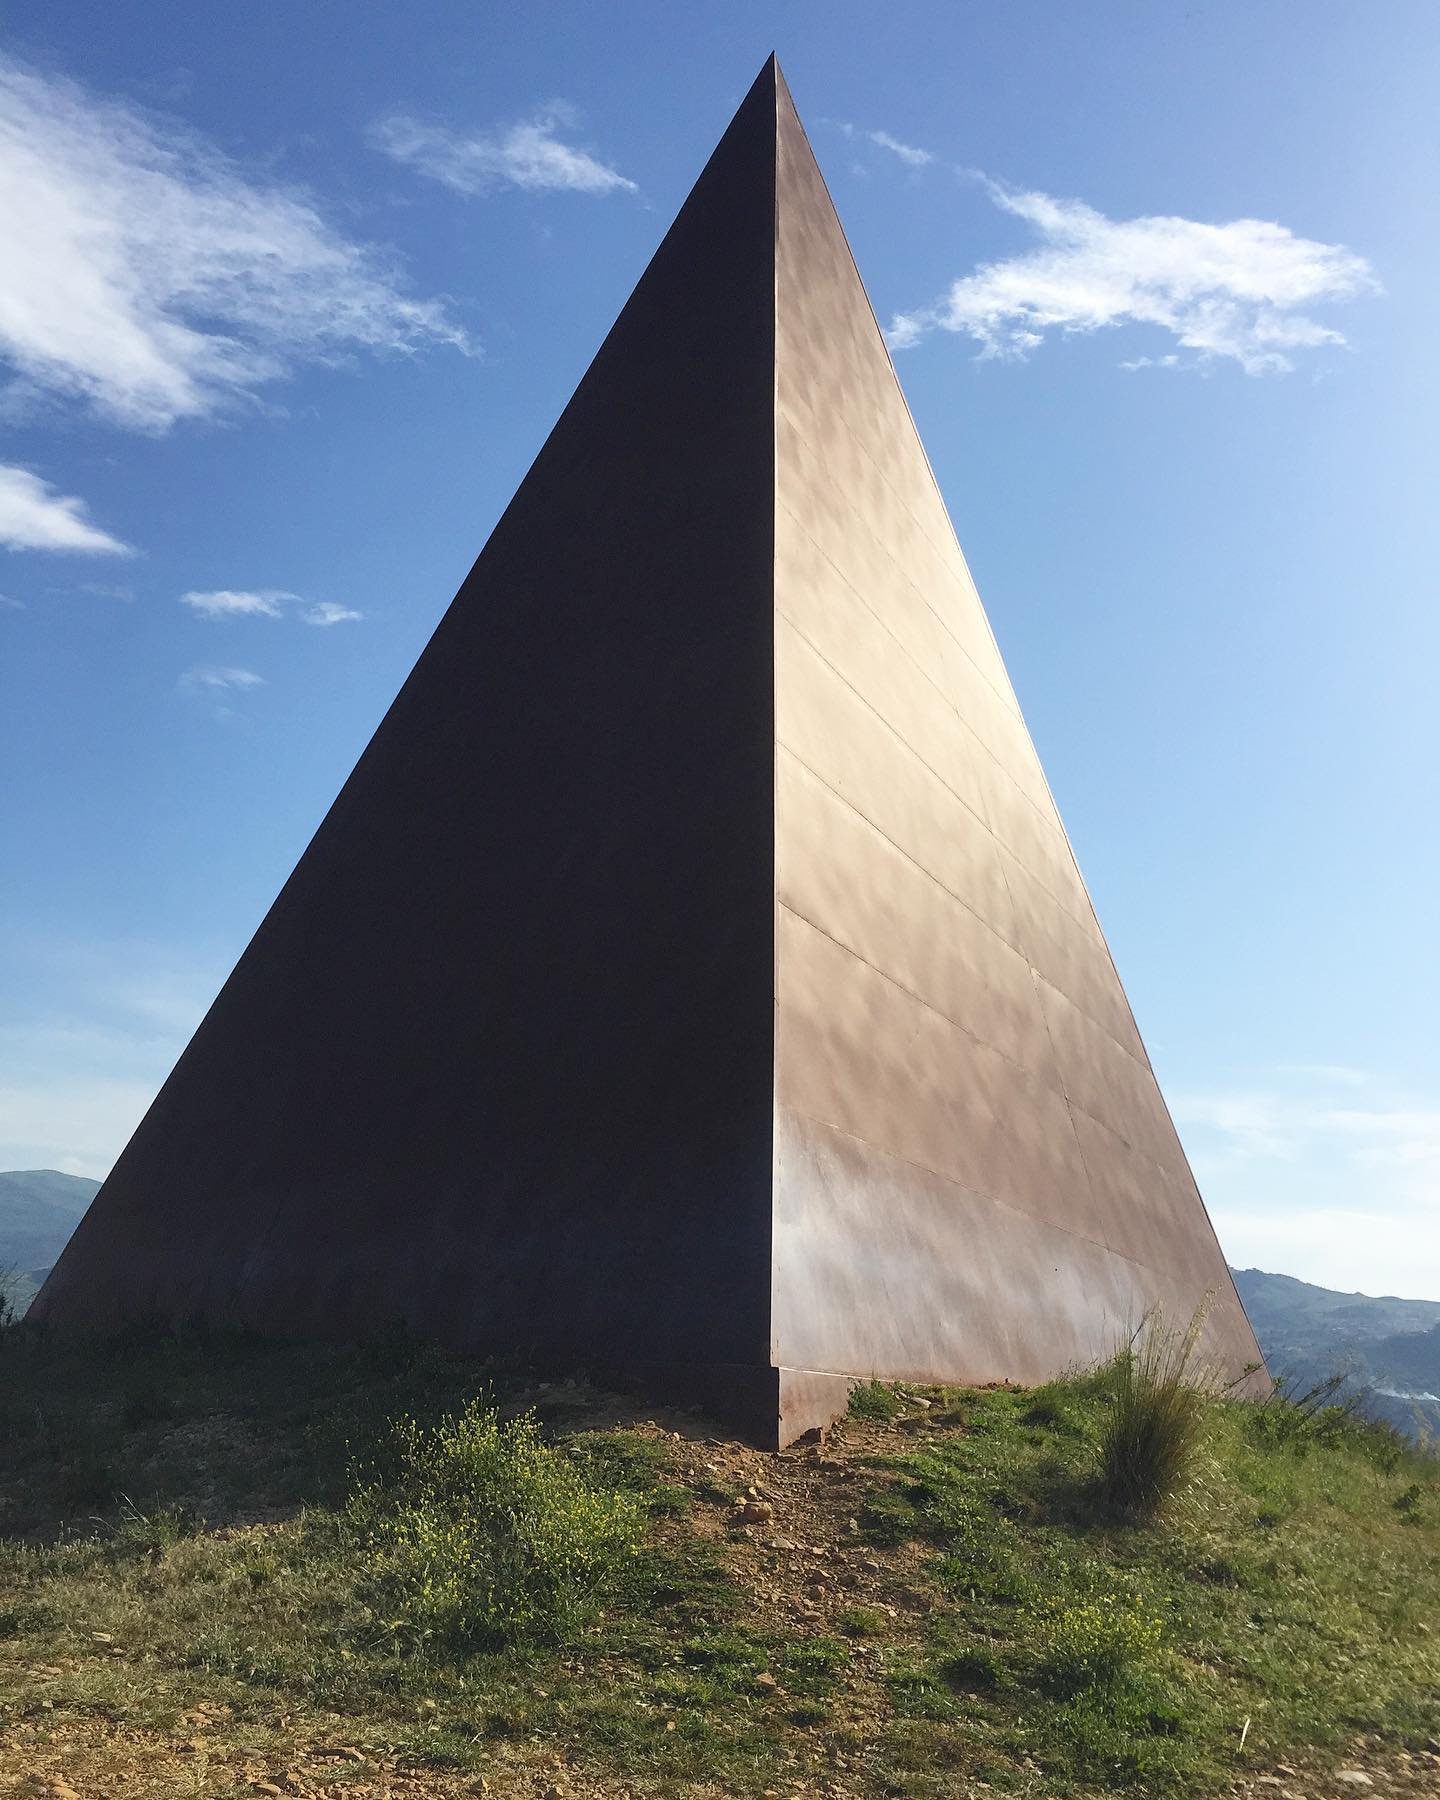 La Piramide della luce a Fiumara d’arte